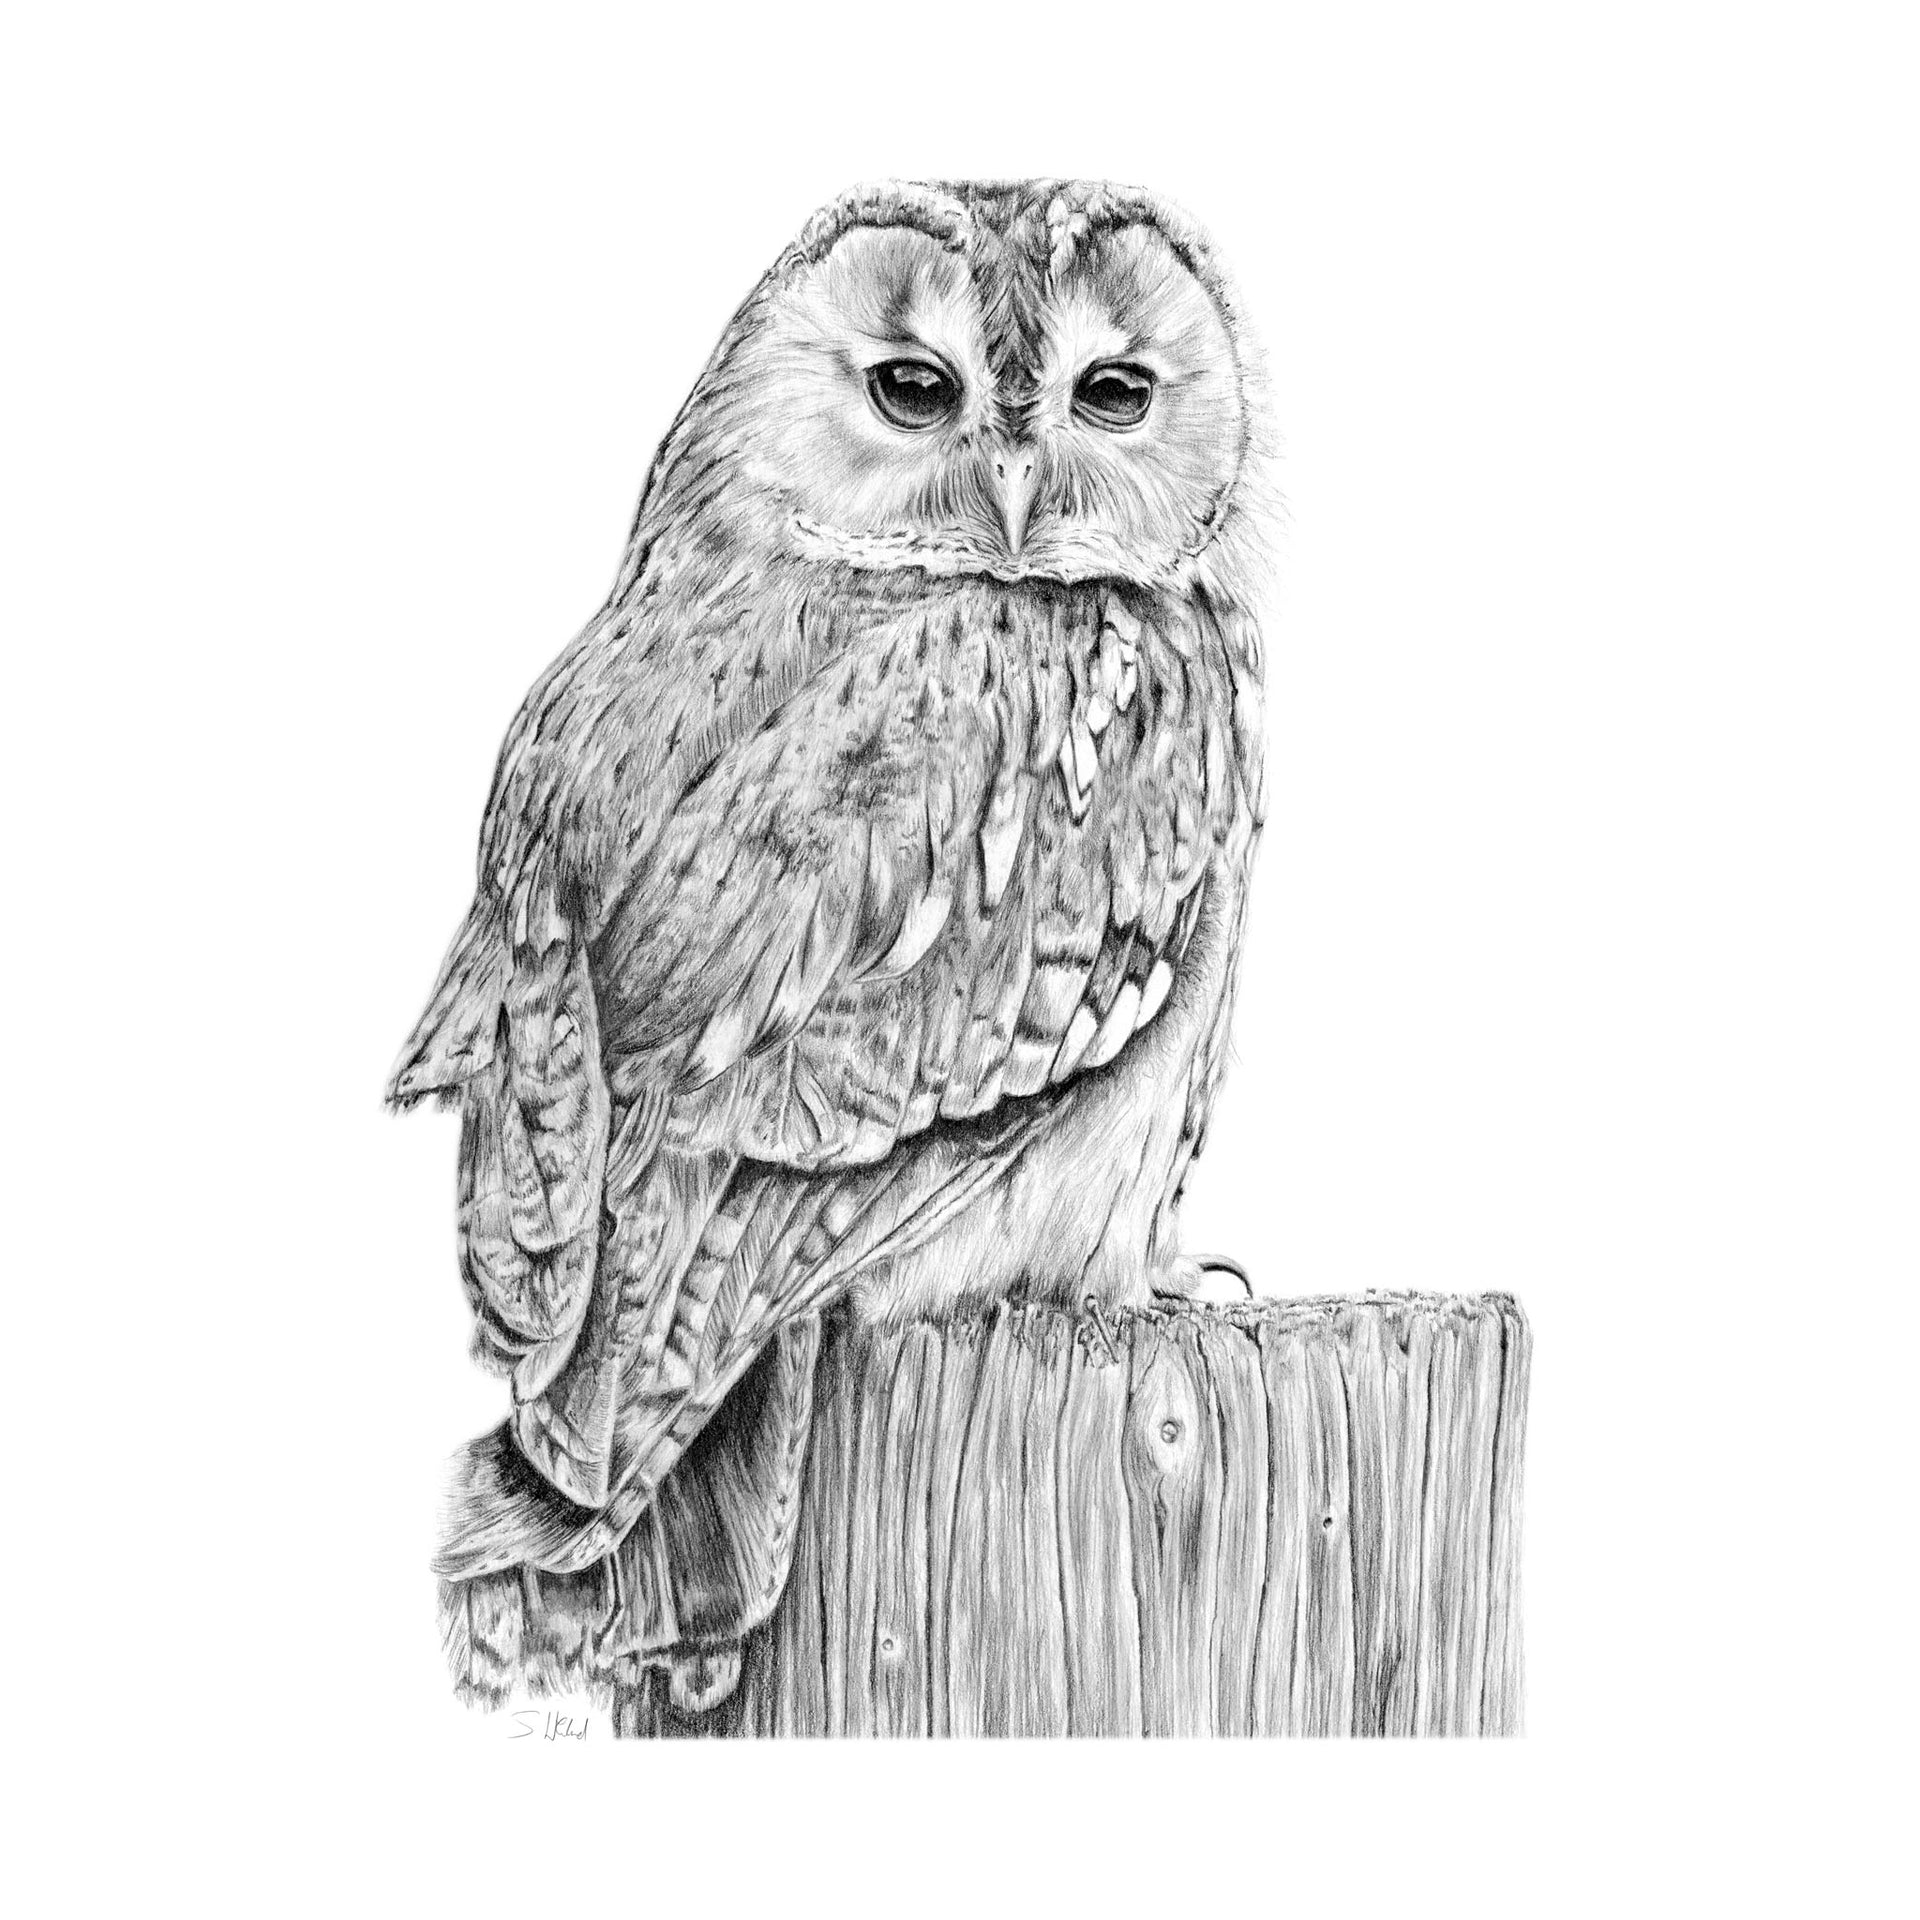 Owl pencil drawing print